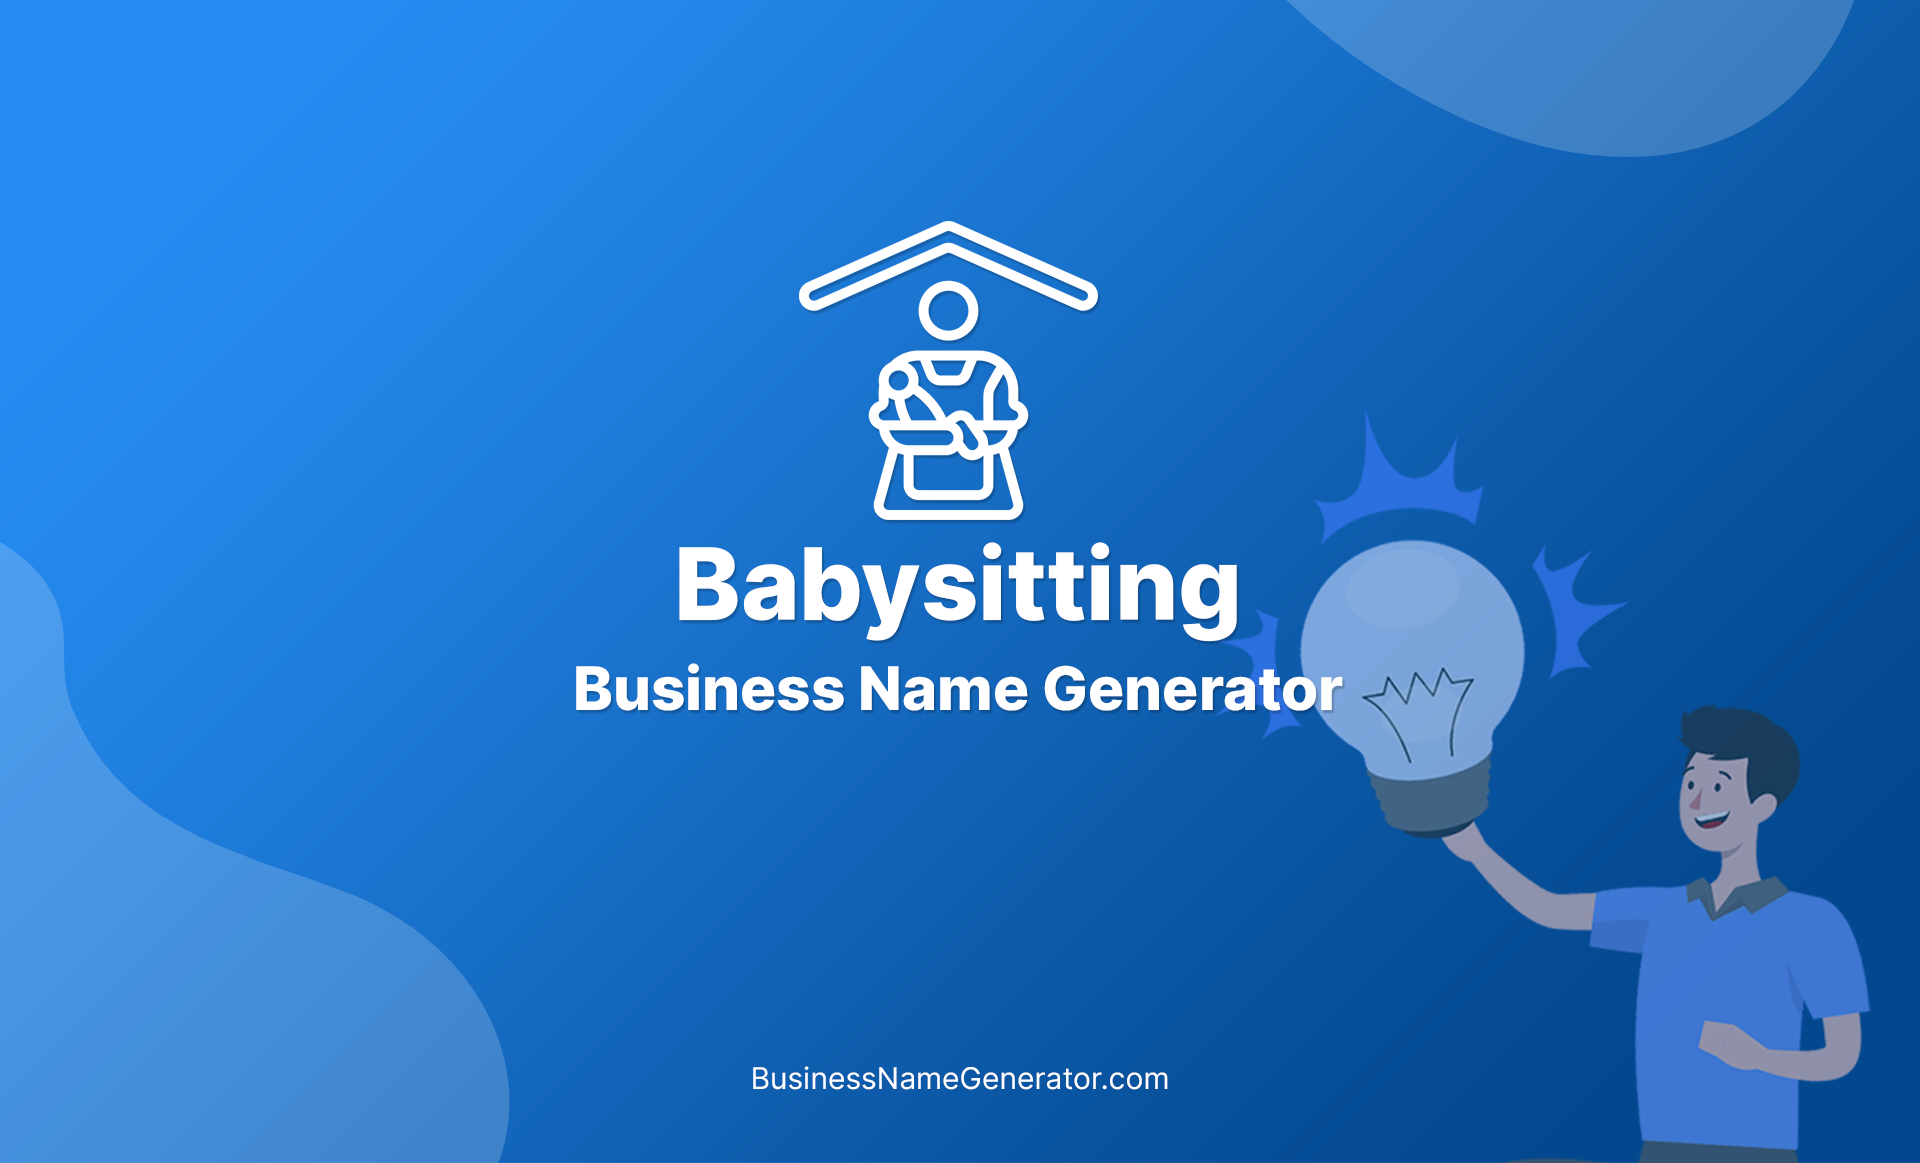 Babysitting Business Name Generator